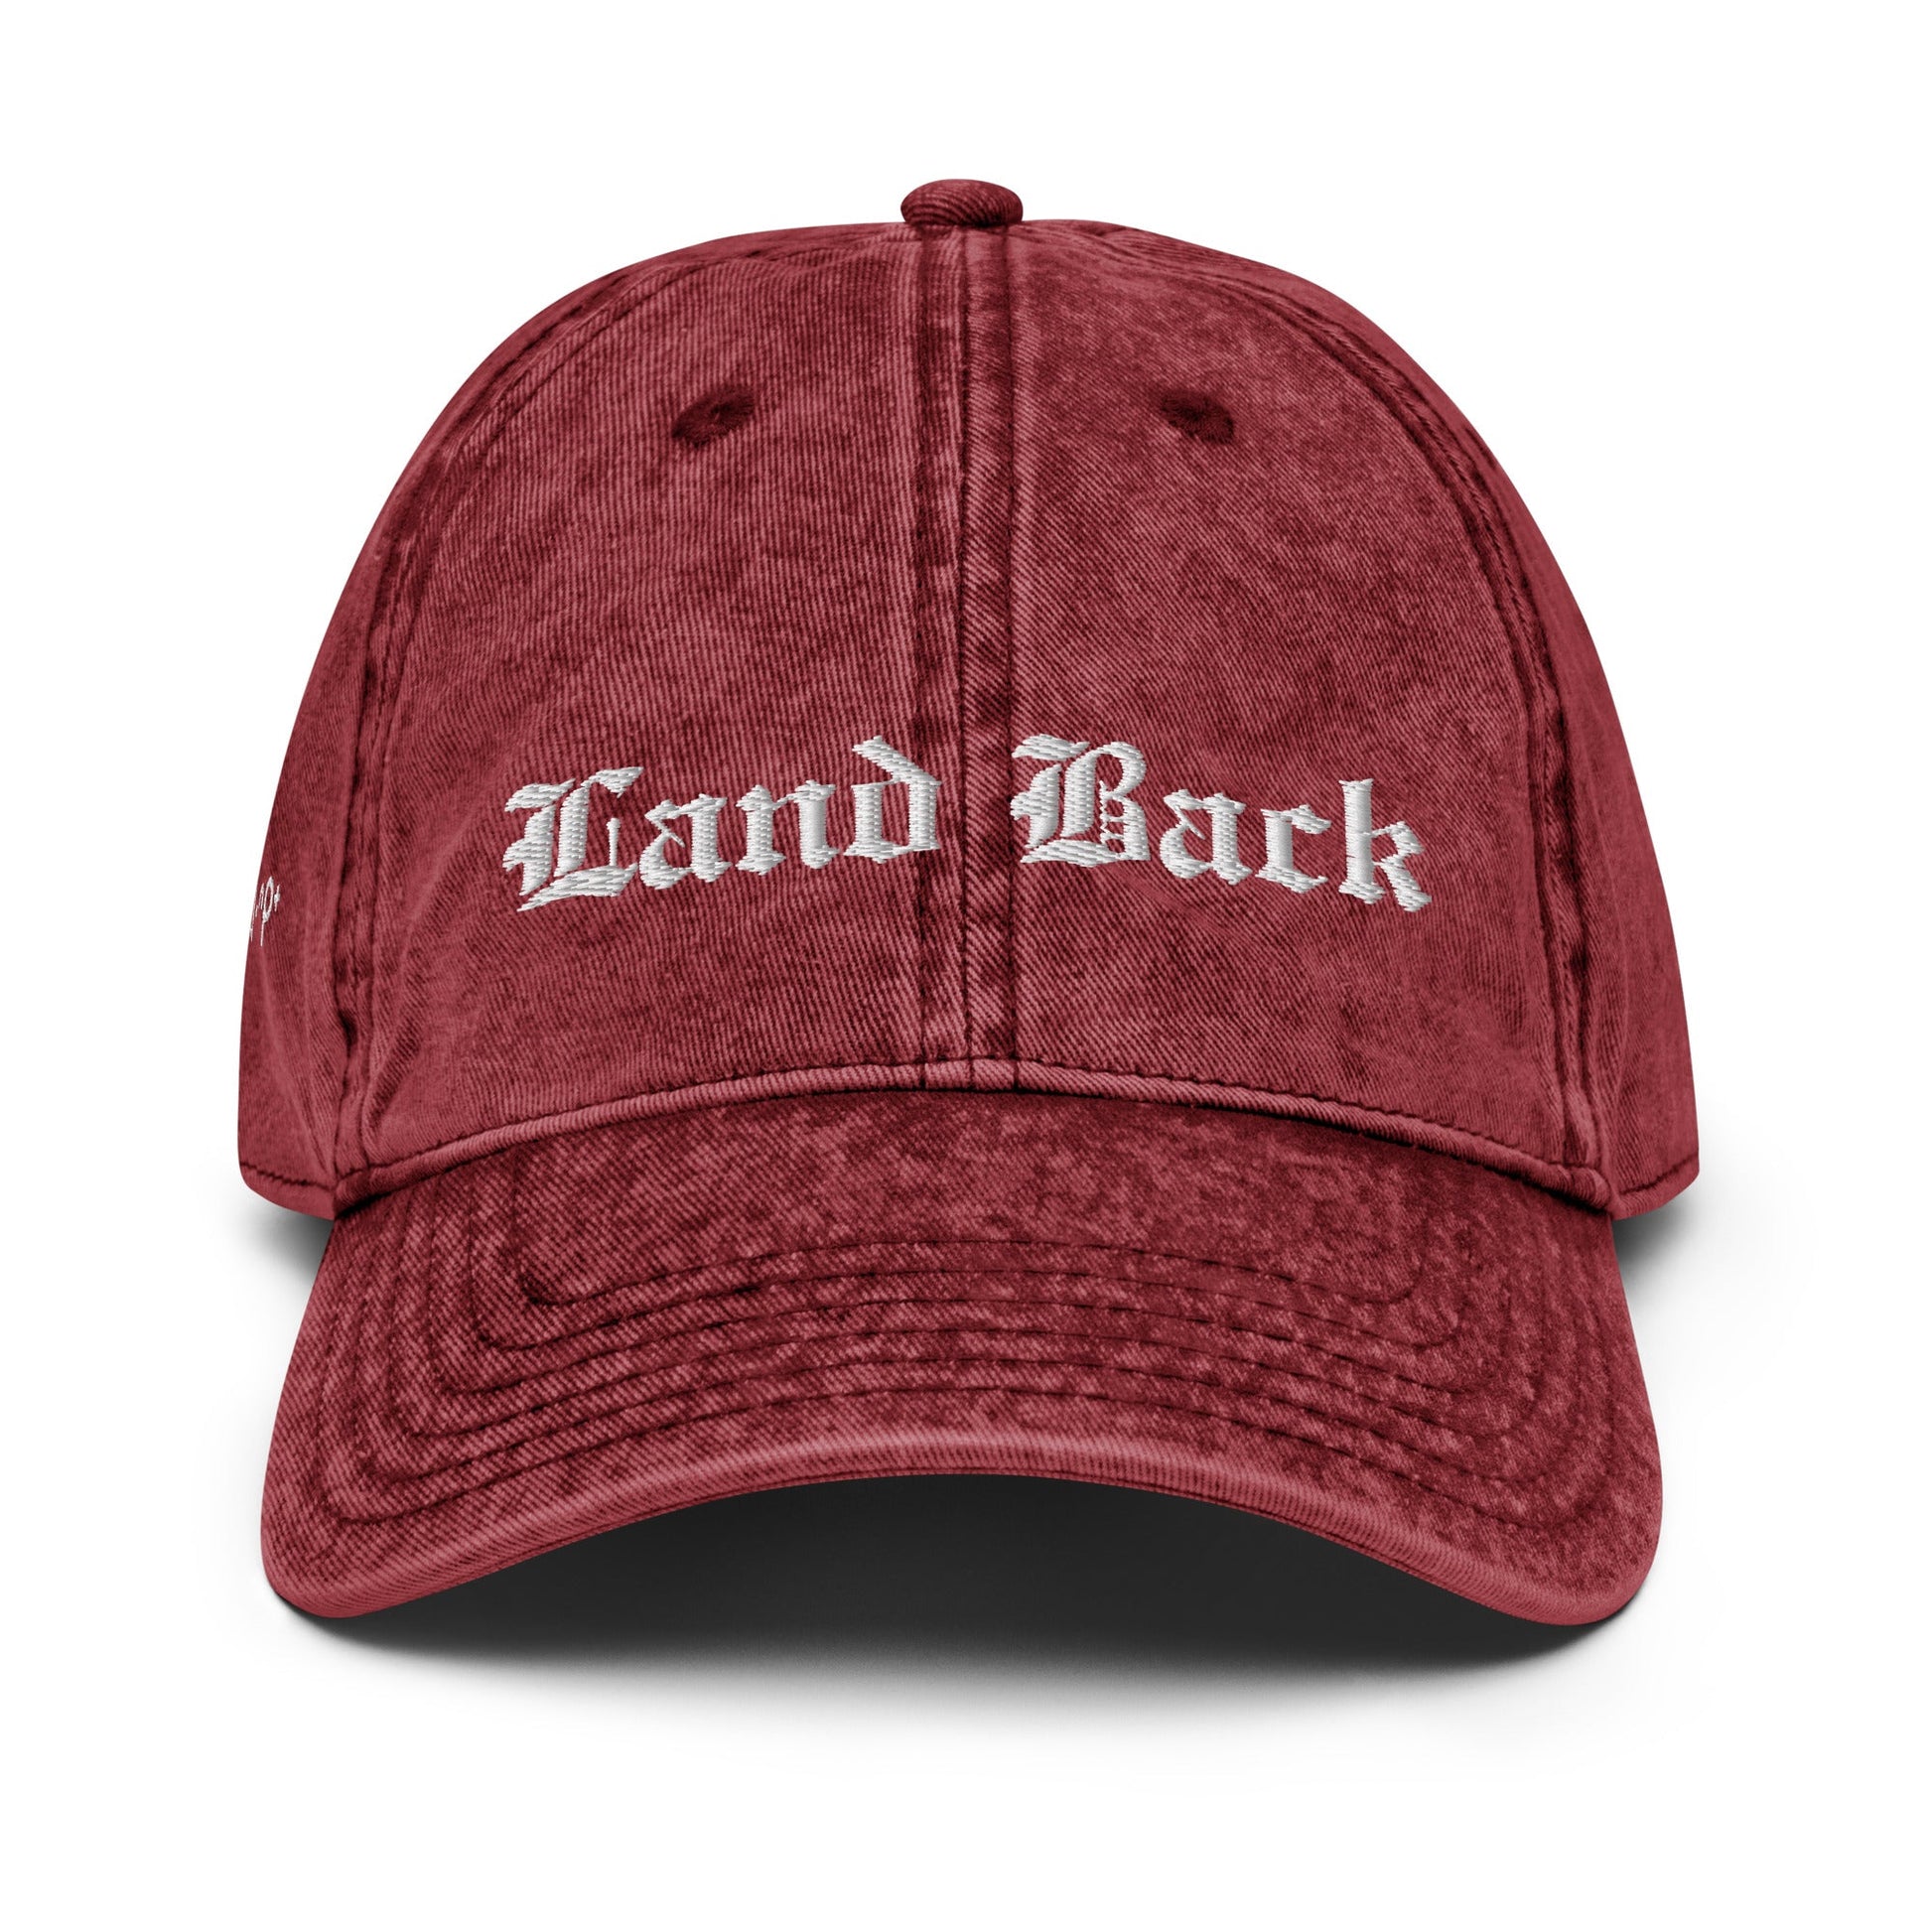 Land Back Vintage Cotton Twill Cap - Nikikw Designs